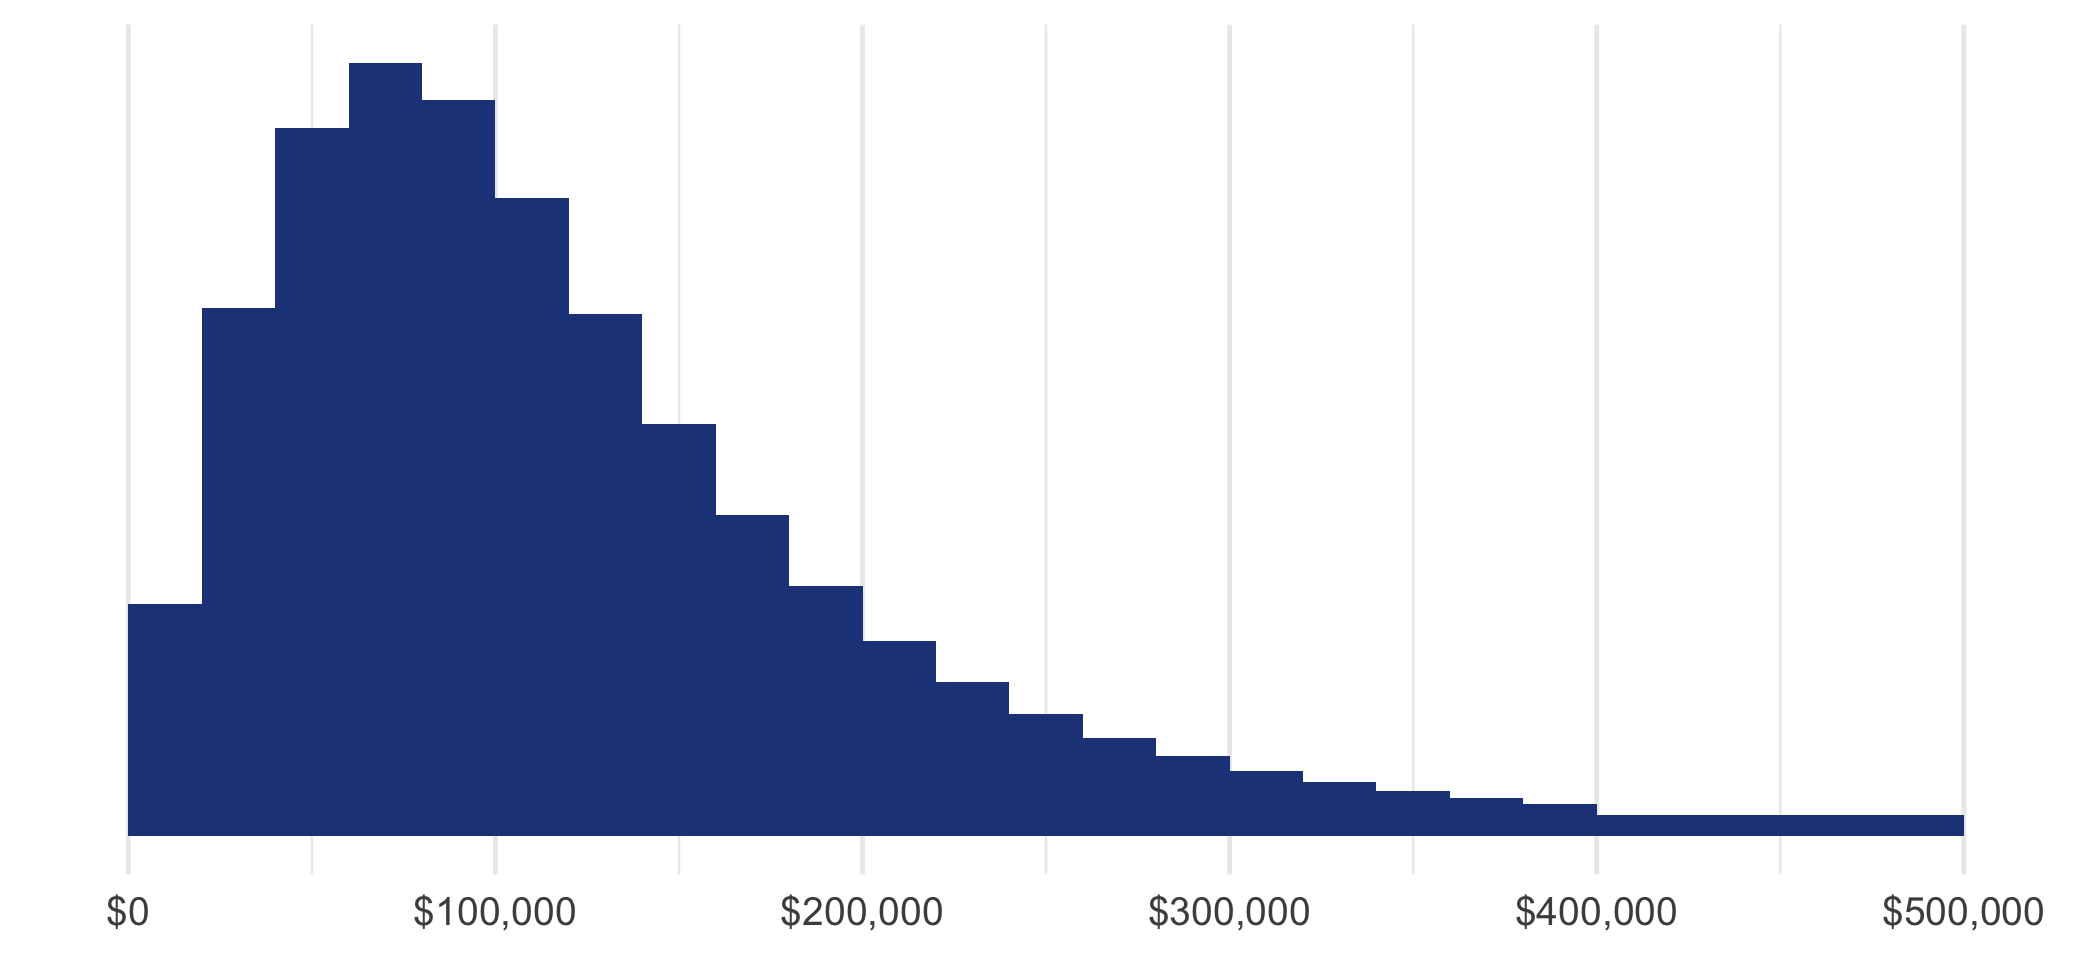 Distribution of users' incomes